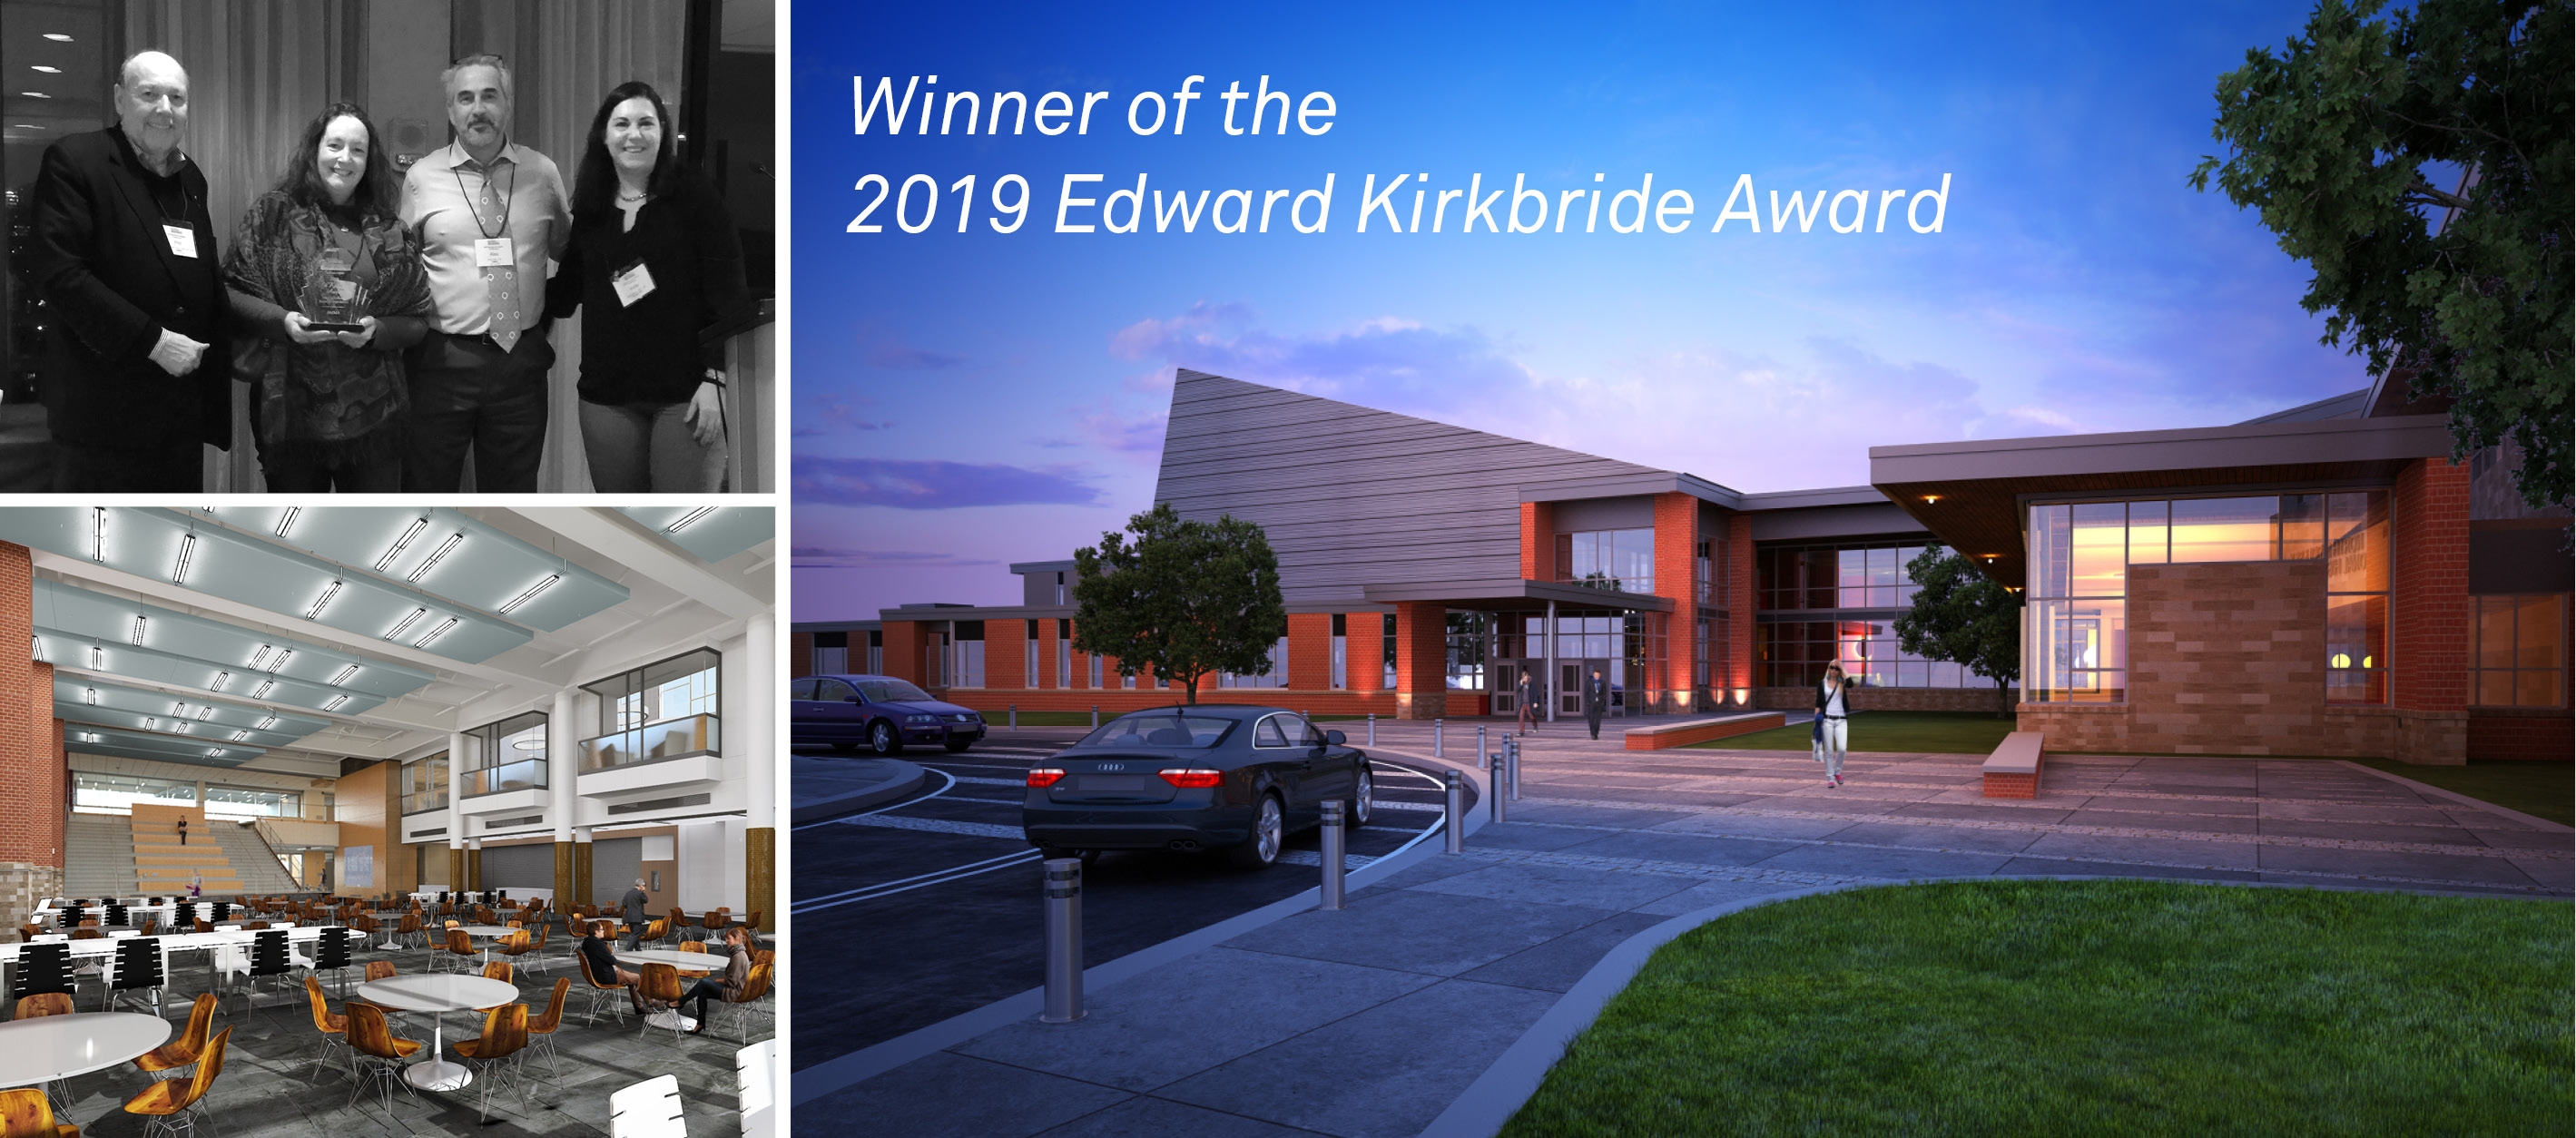 North Middlesex Regional High School Wins Edward Kirkbride Award